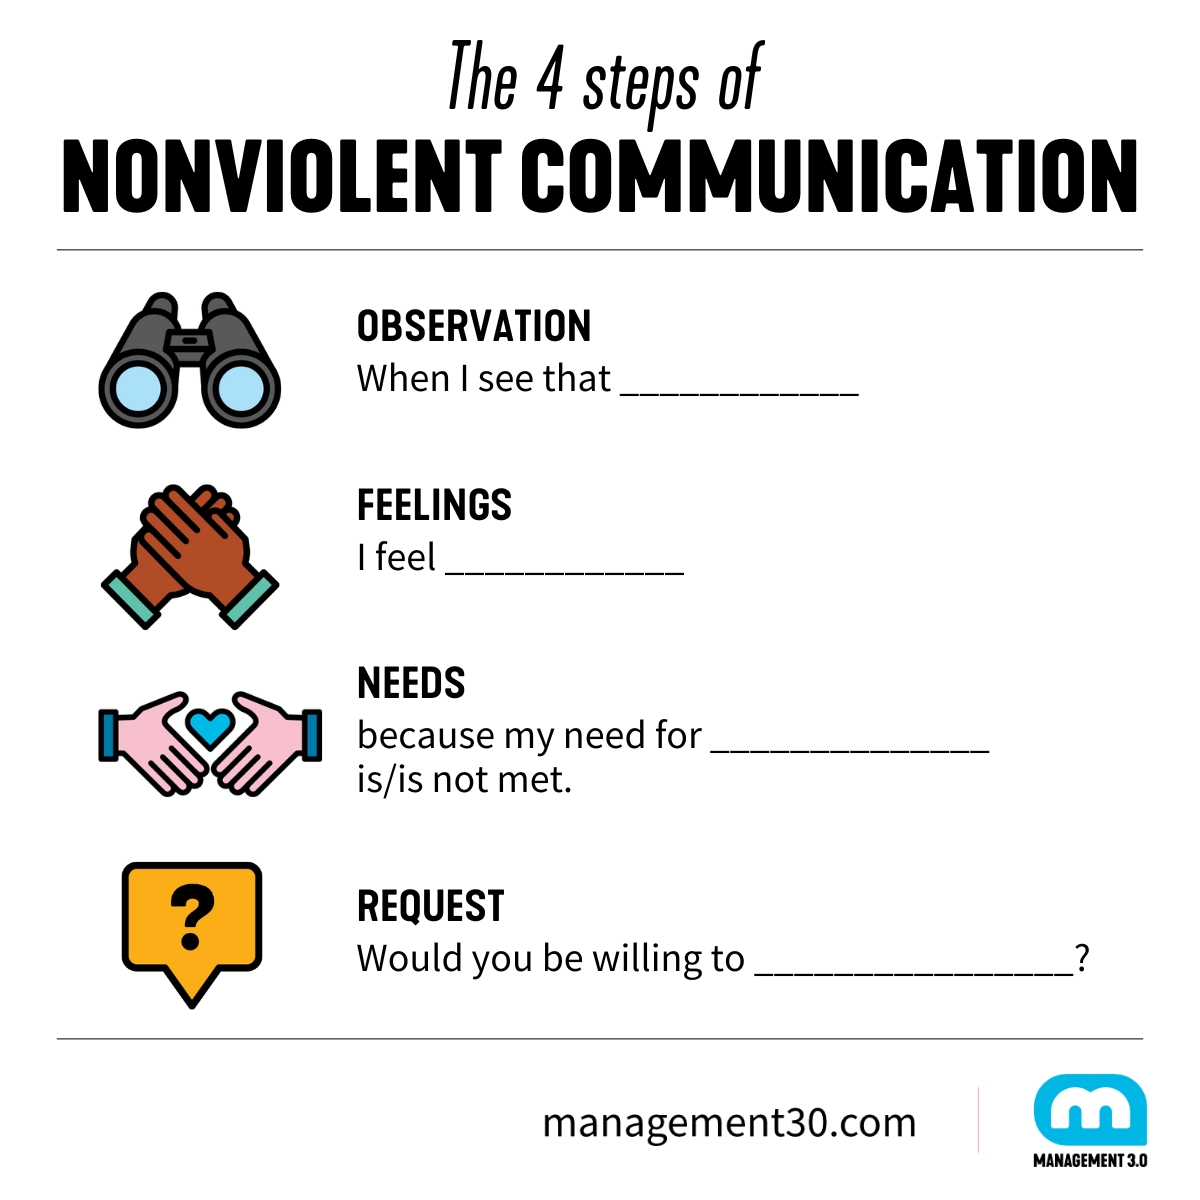 The 4 steps of Nonviolent Communication (NVC)